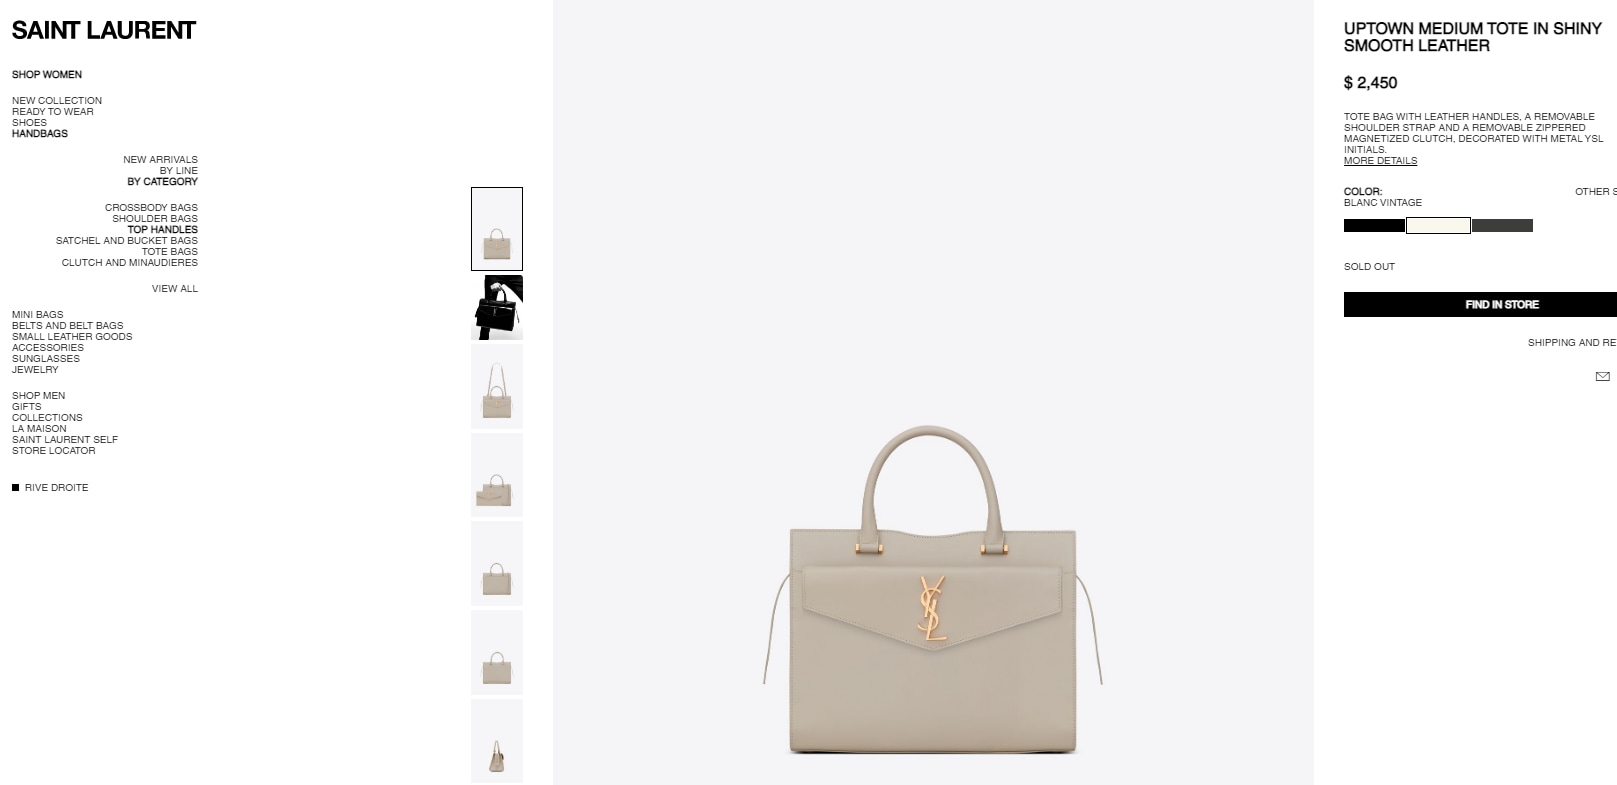 Nora Fatehi's bag is worth ₹1,80,054(ysl.com)